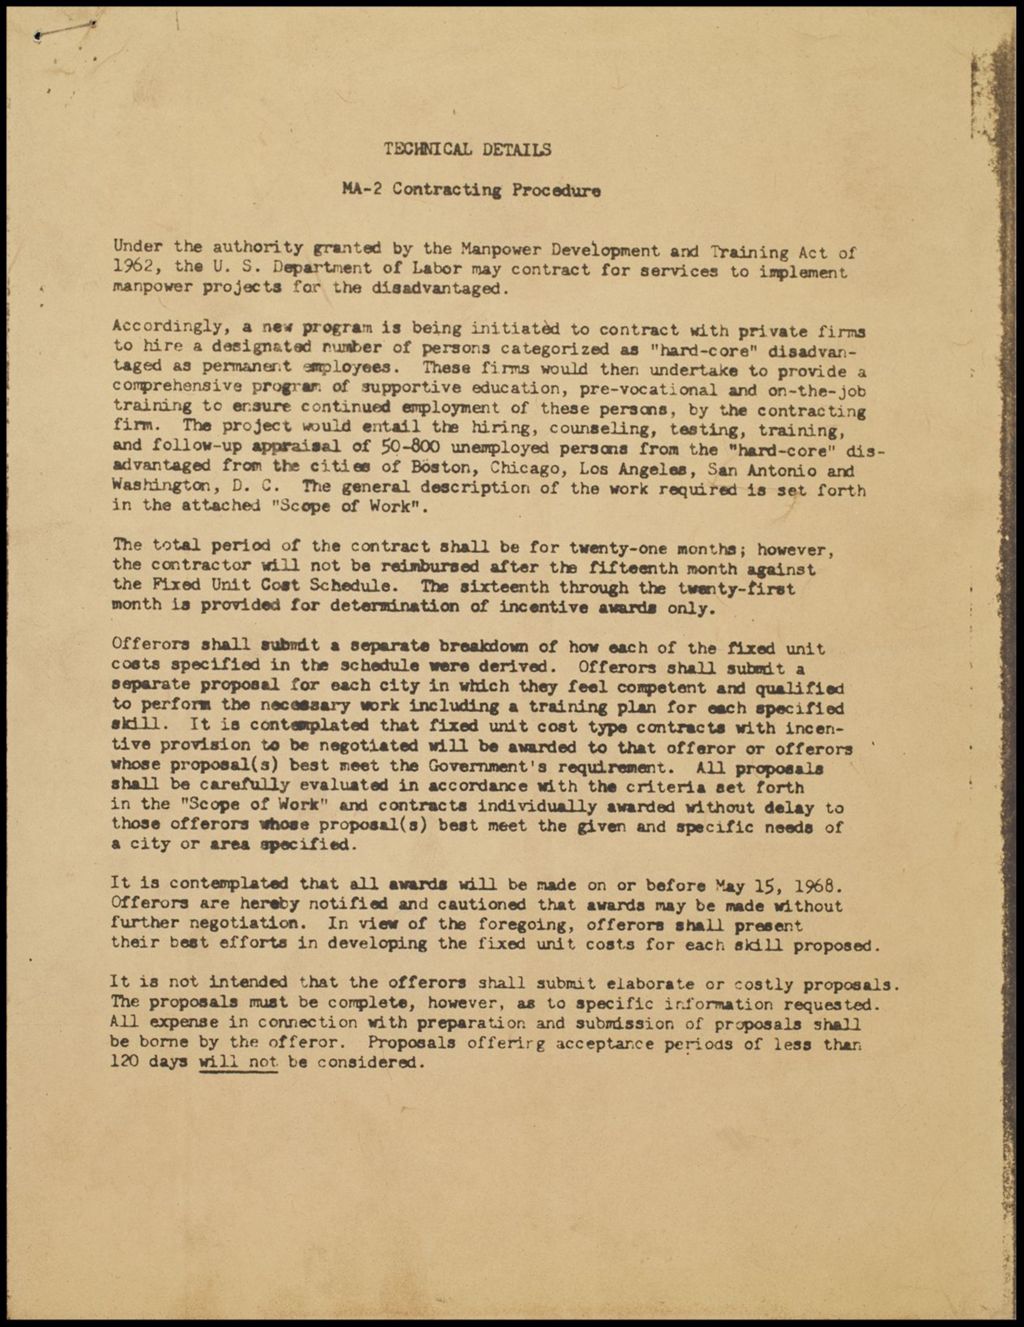 Miniature of MA-2 Contracting Procedures, 1962 (Folder II-24)